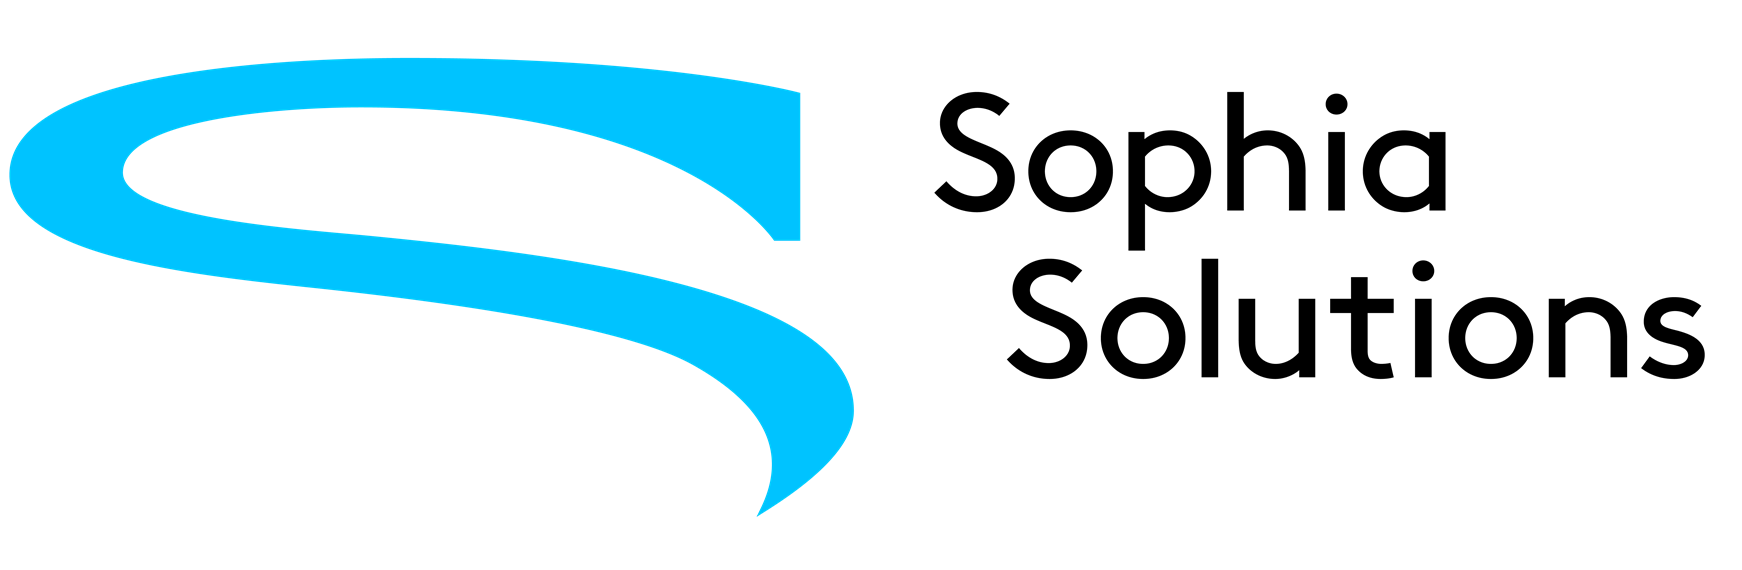 Sophia Solutions